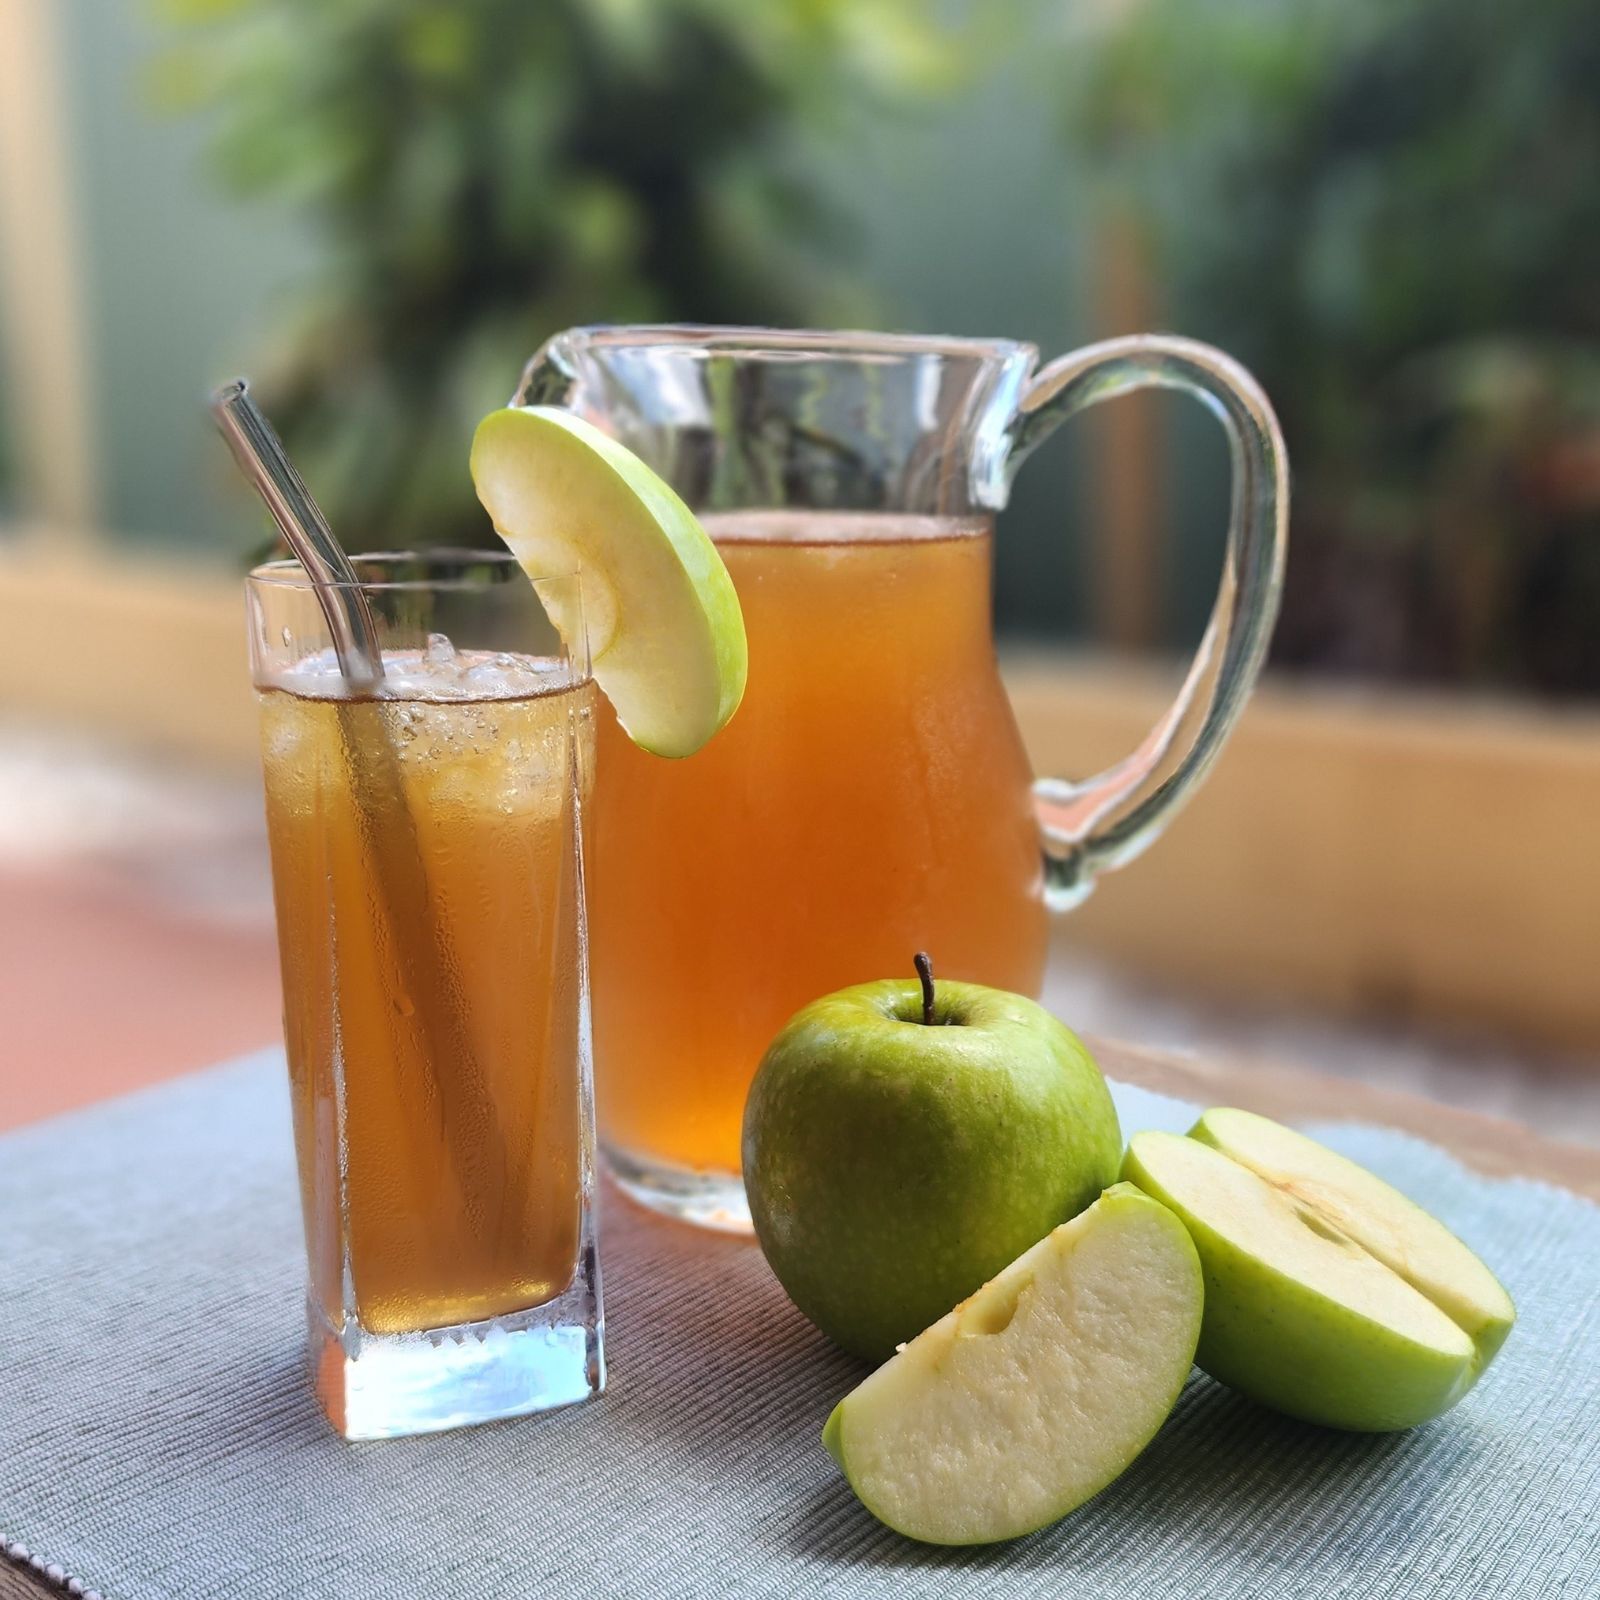 Bolero drinks  Get your sugar-free soft drink in apple flavor